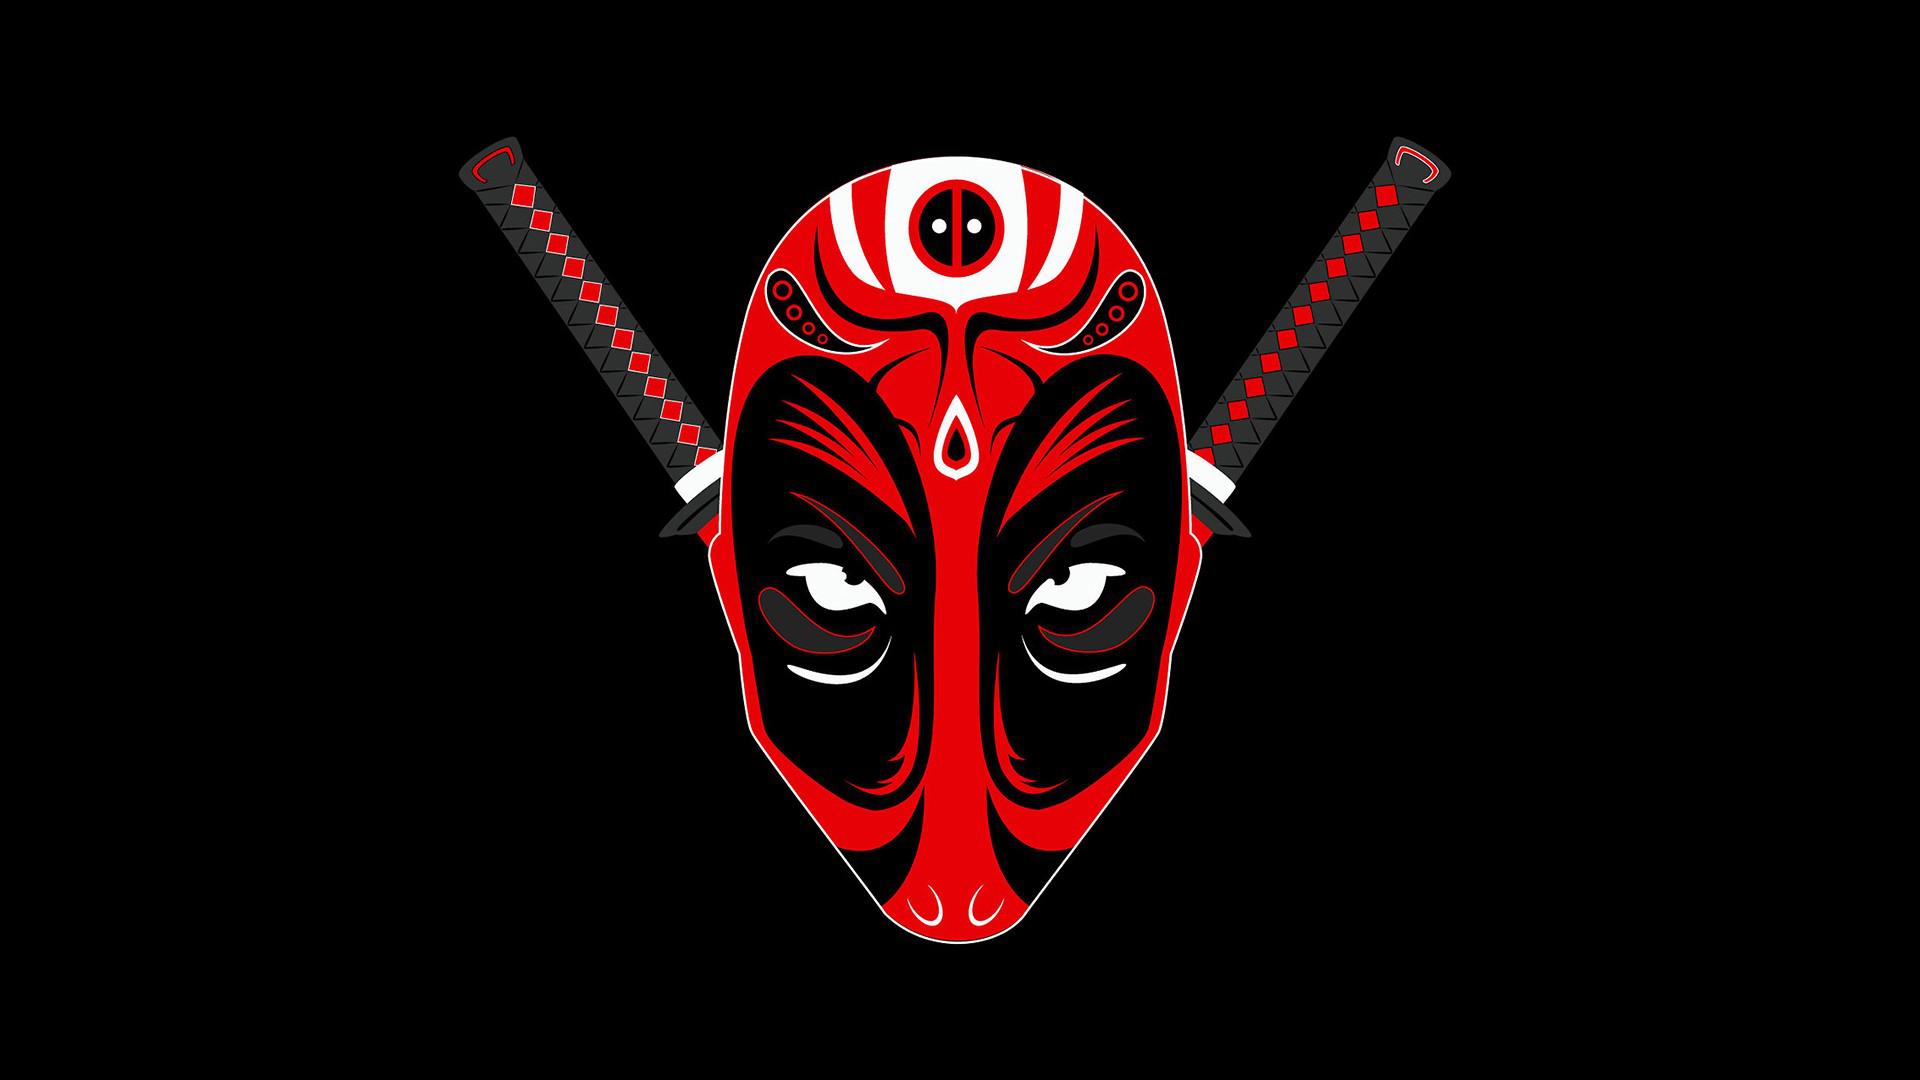  47 Deadpool  Logo  Wallpaper  on WallpaperSafari